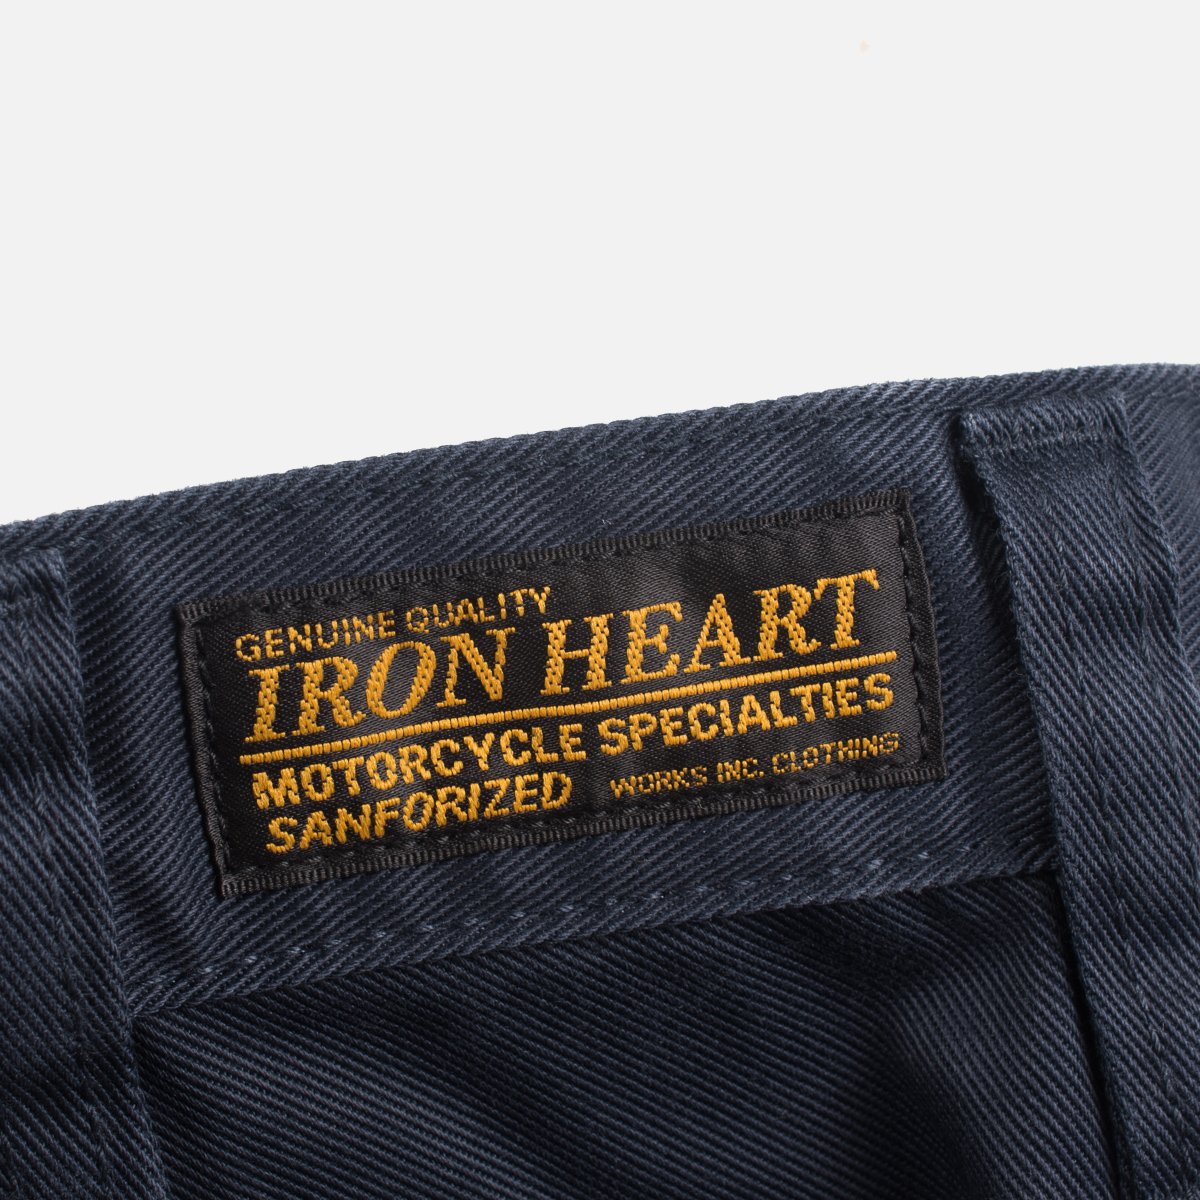 Iron Heart - 721 9oz Selvedge Cotton Slim Tapered Chinos - Navy